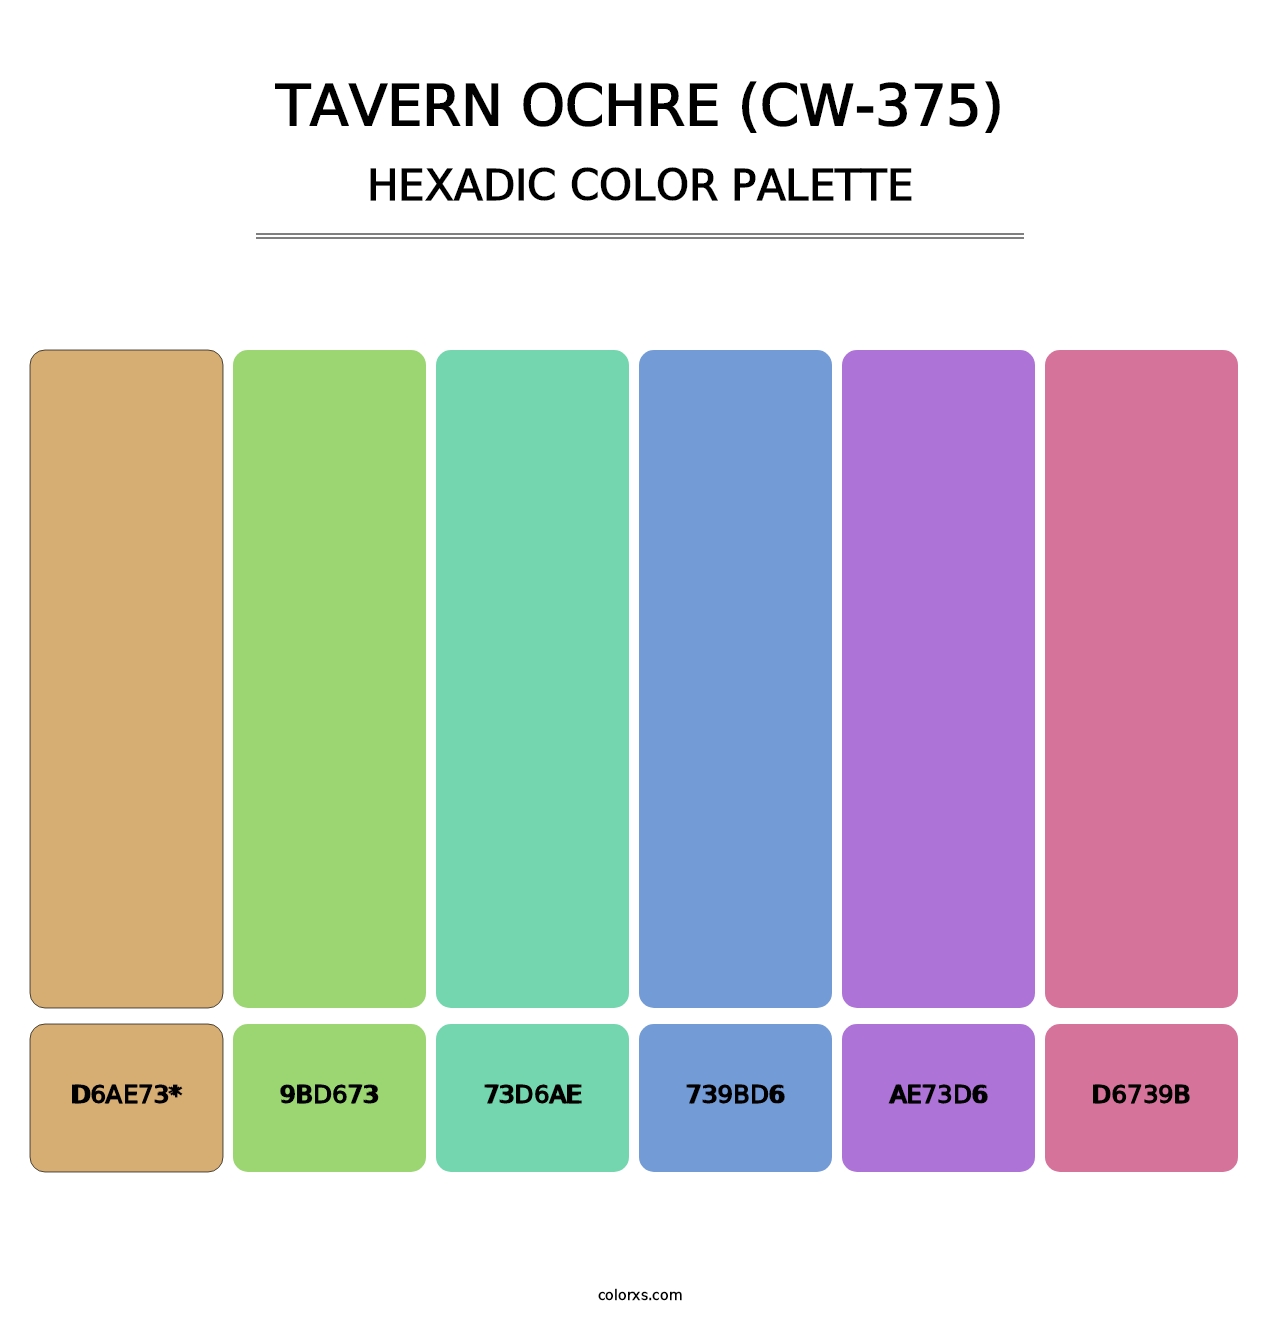 Tavern Ochre (CW-375) - Hexadic Color Palette